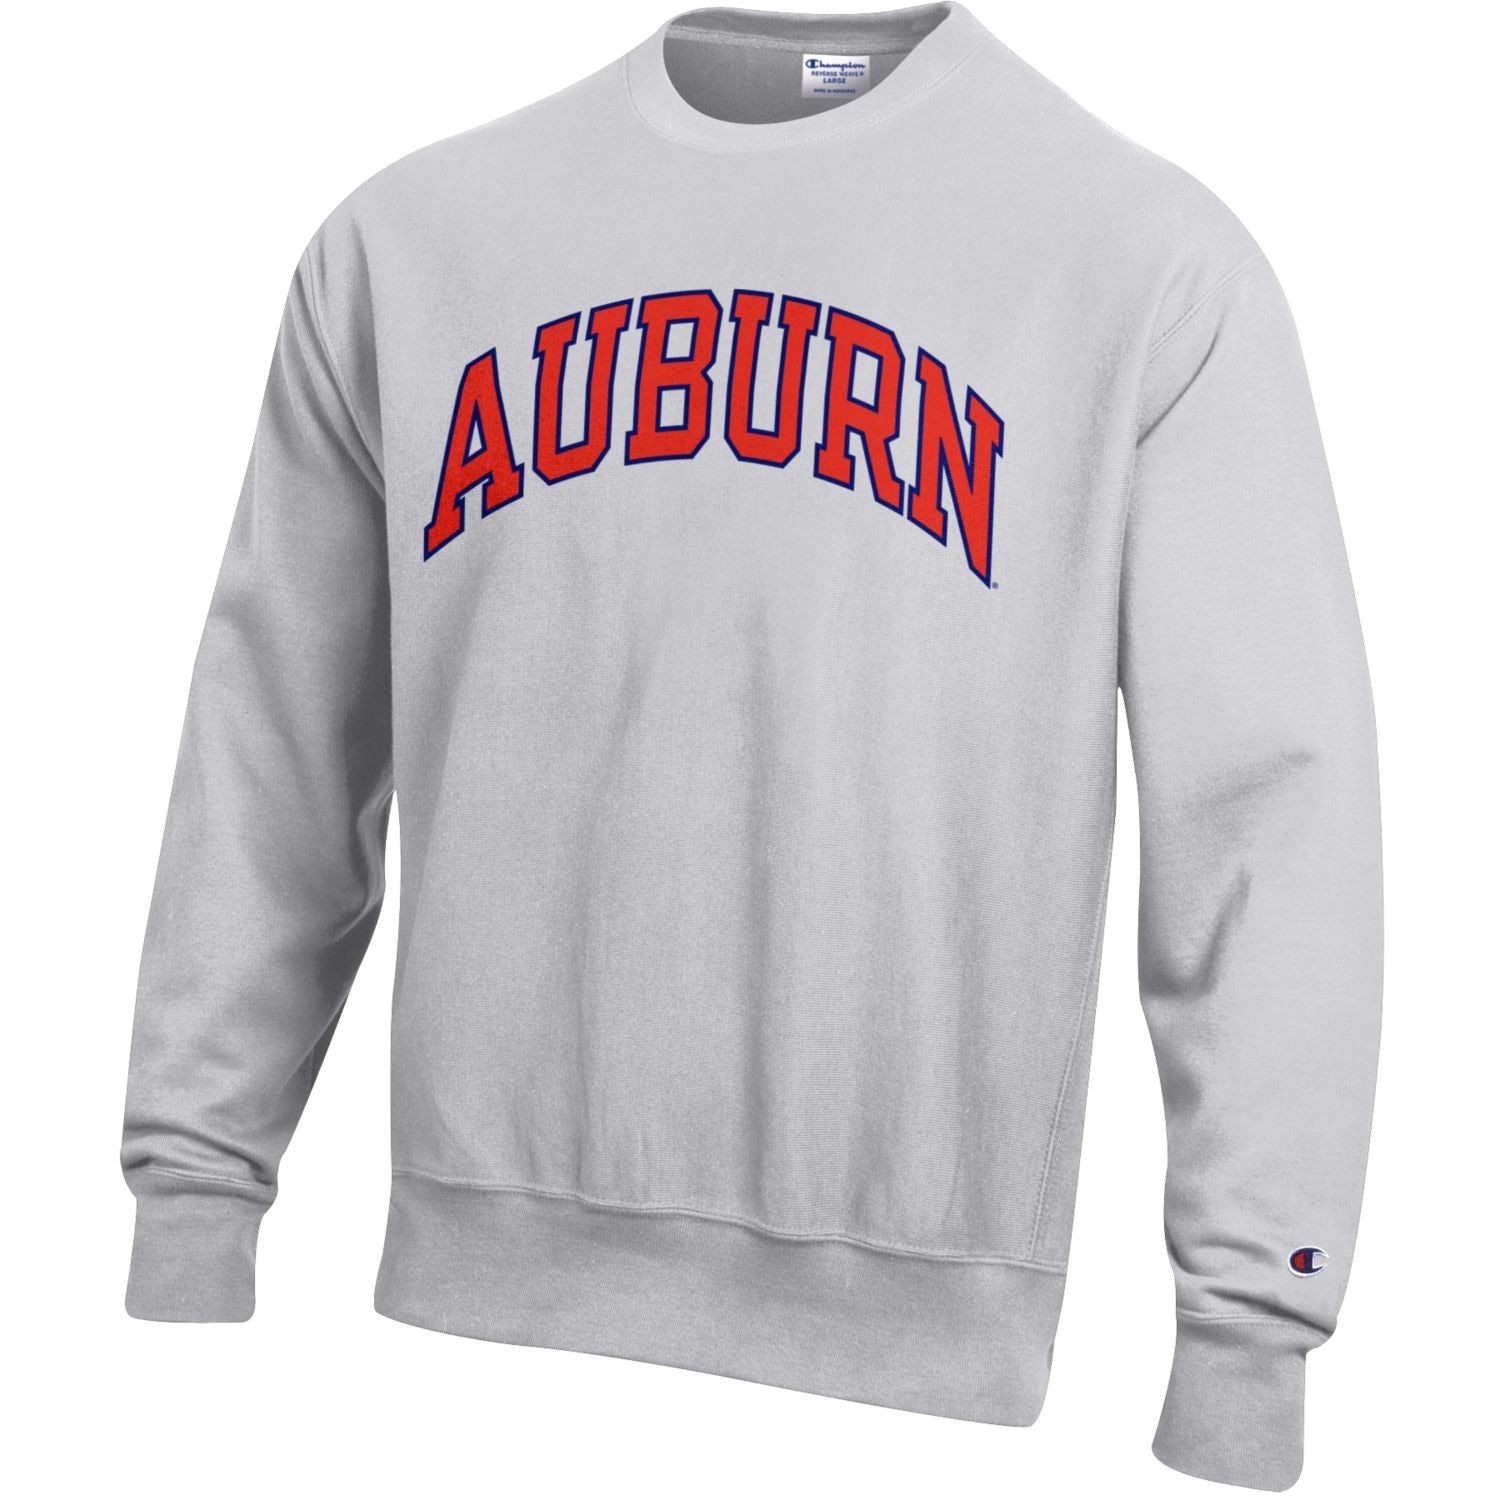 Auburn Tigers Champion Reverse Weave Sweater